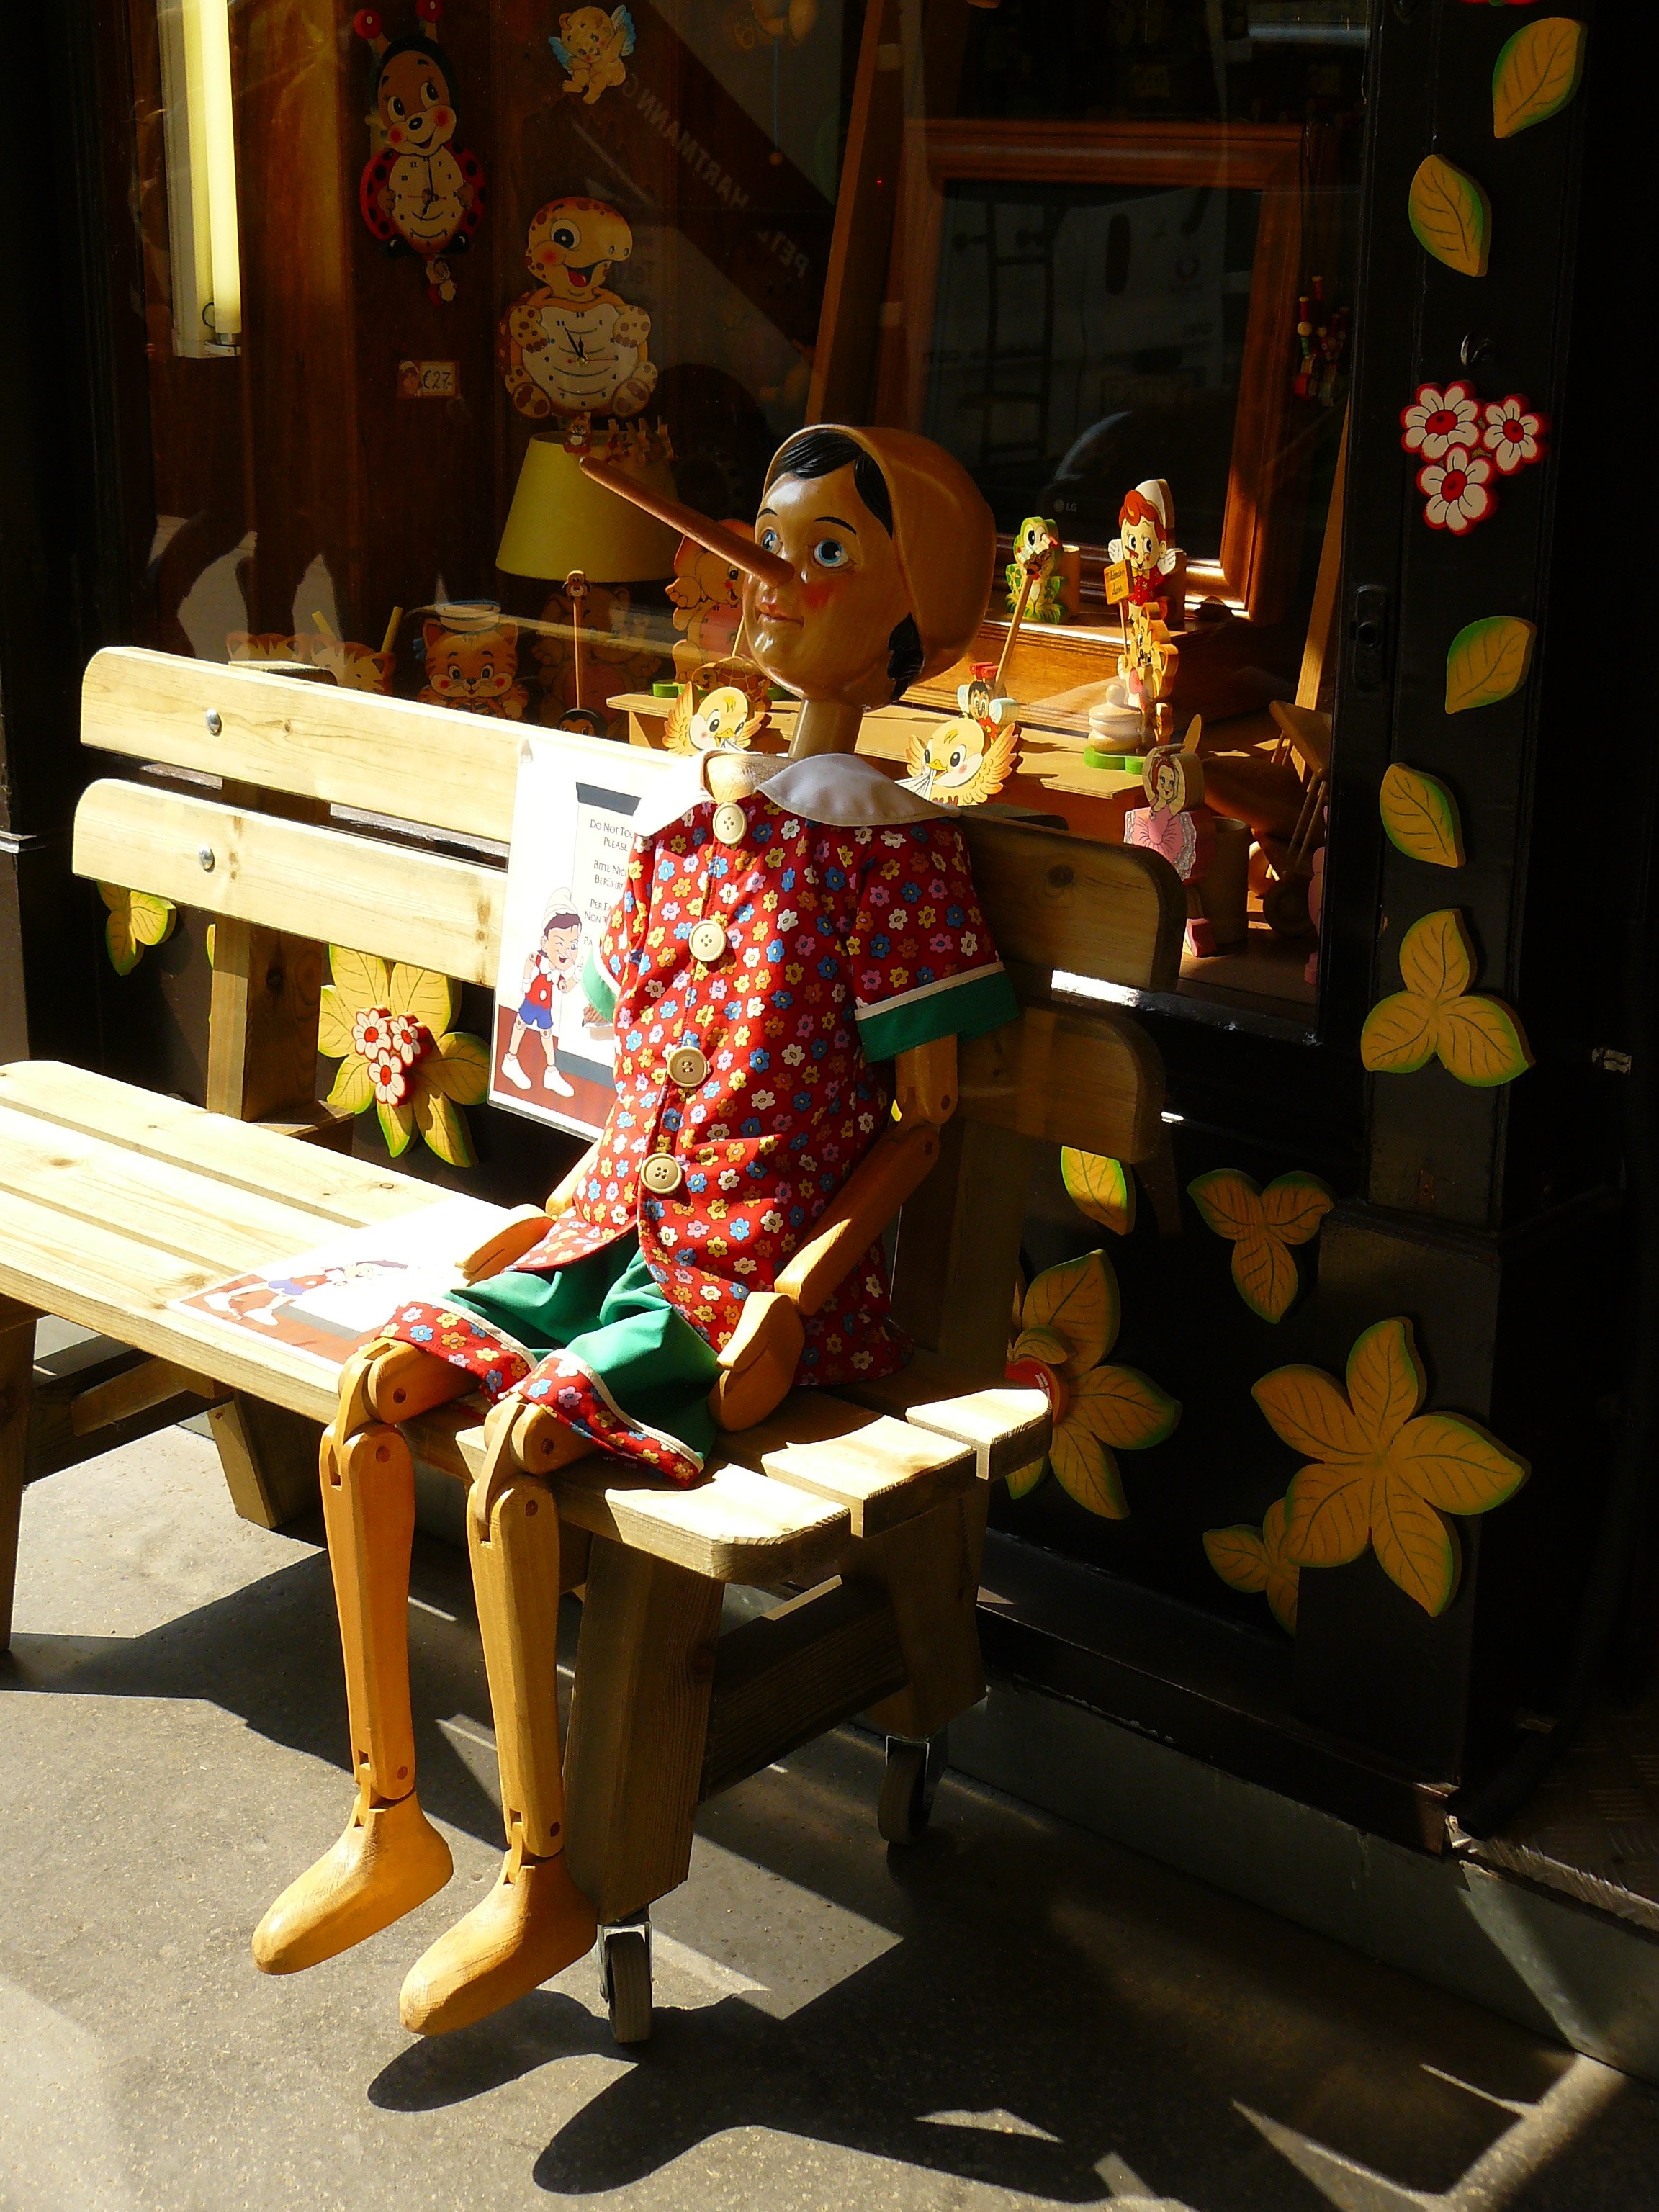 Pinocchio puppet sitting on bench